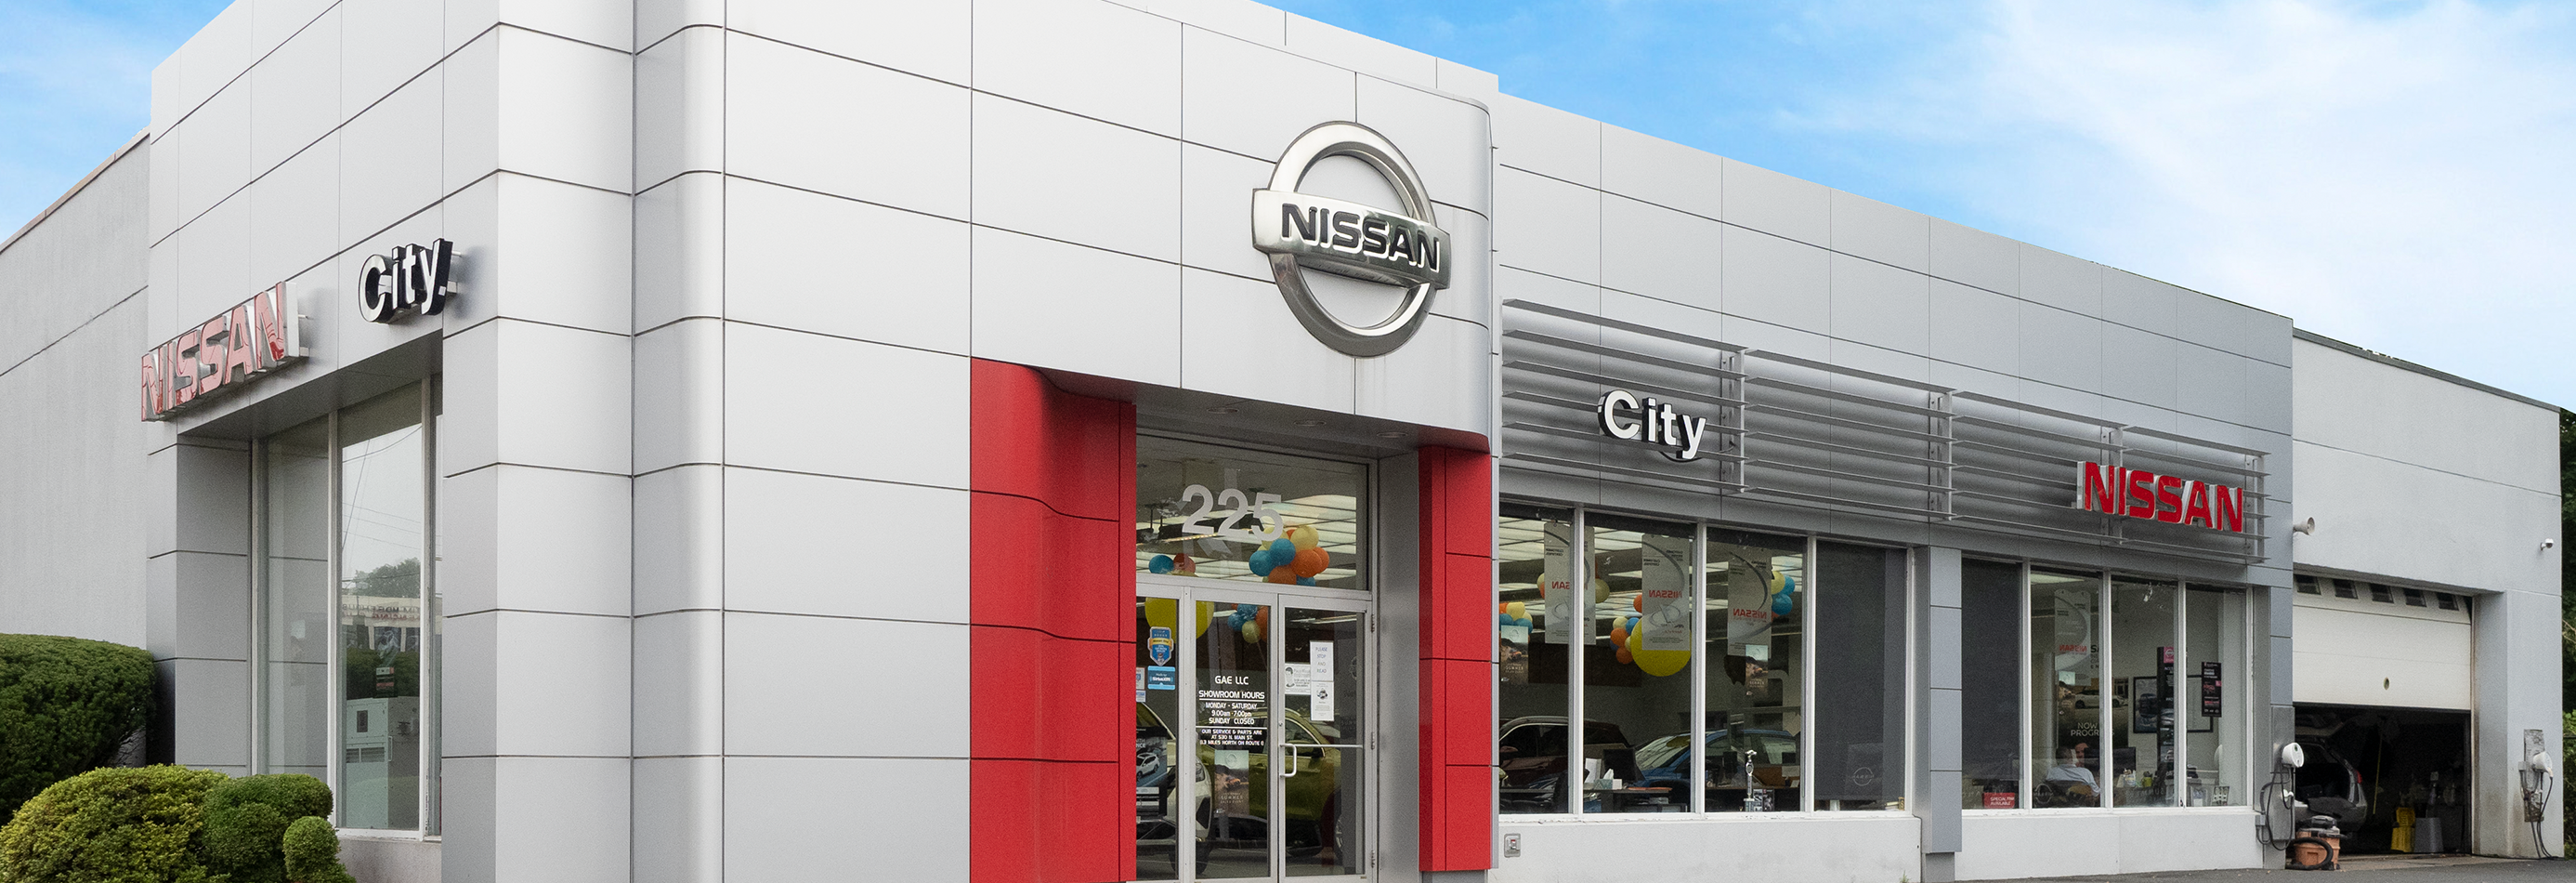 Nissan City serving Larchmont NY